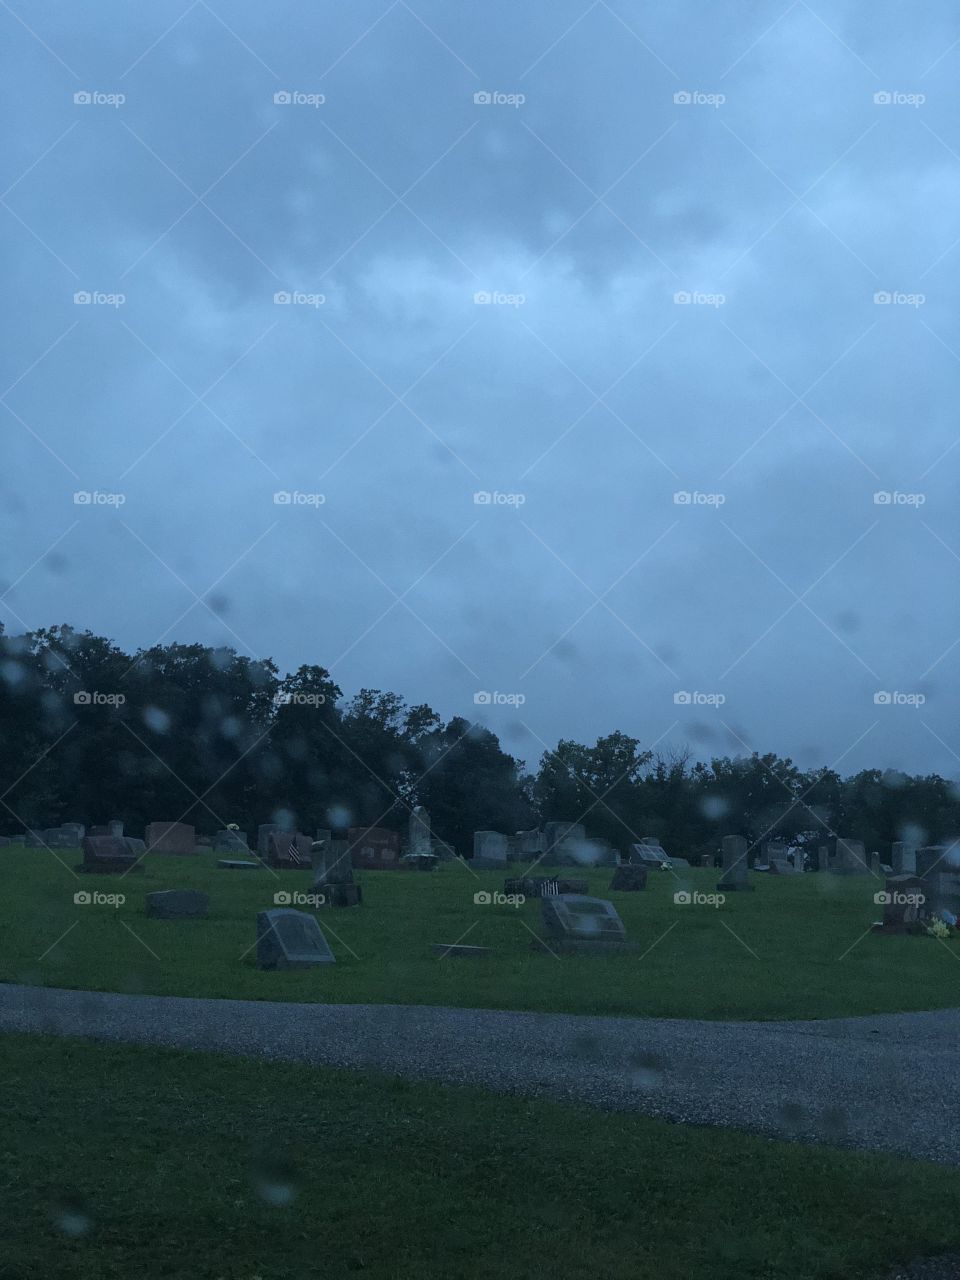 View of cemetery through rainy window